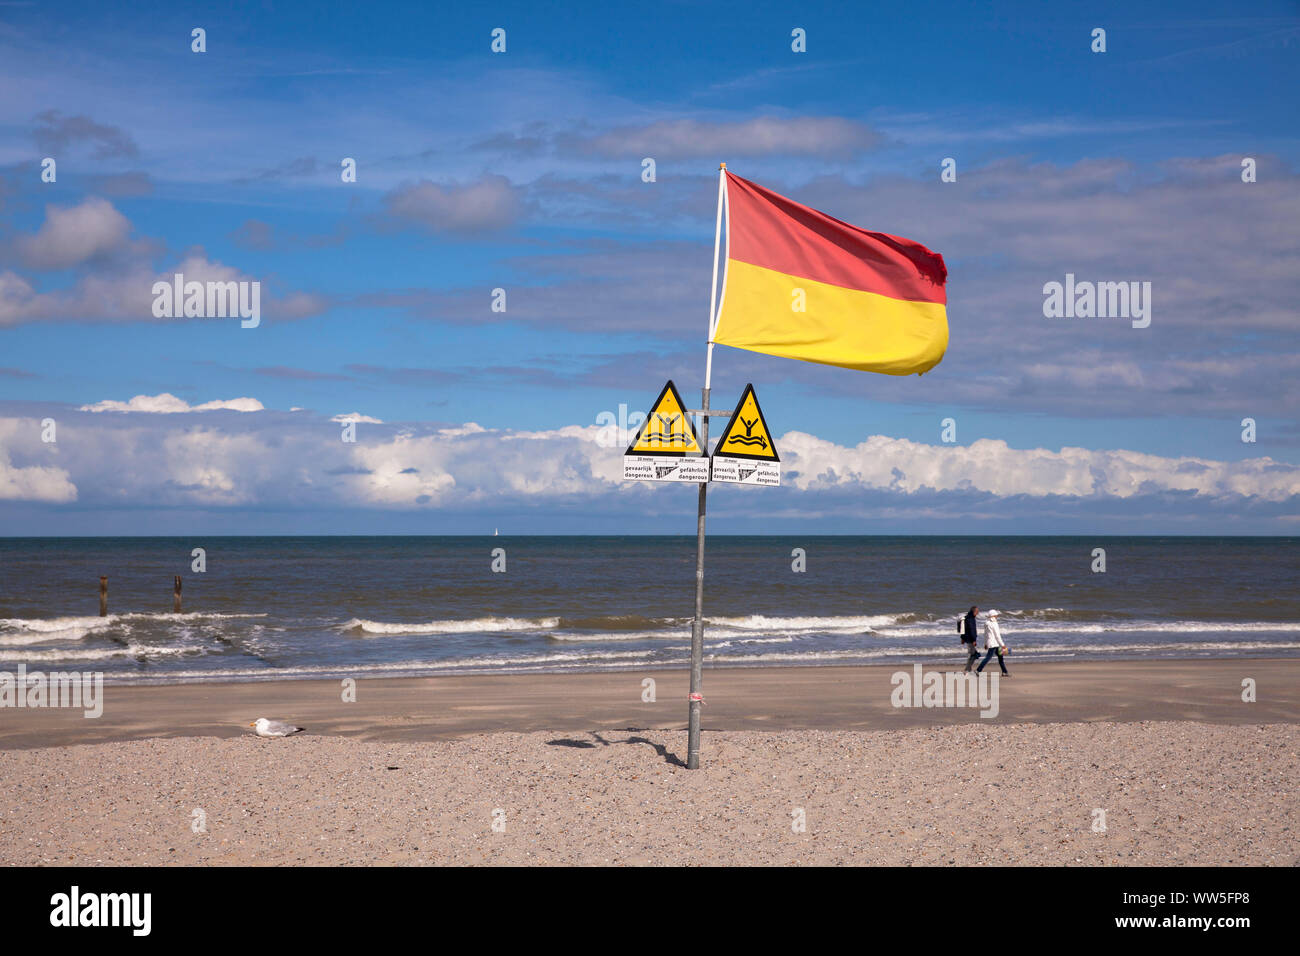 flag and signs warn swimmers of groynes in the water, the beach in Domburg on the peninsula Walcheren, Zeeland, Netherlands.  Flagge und Schilder warn Stock Photo